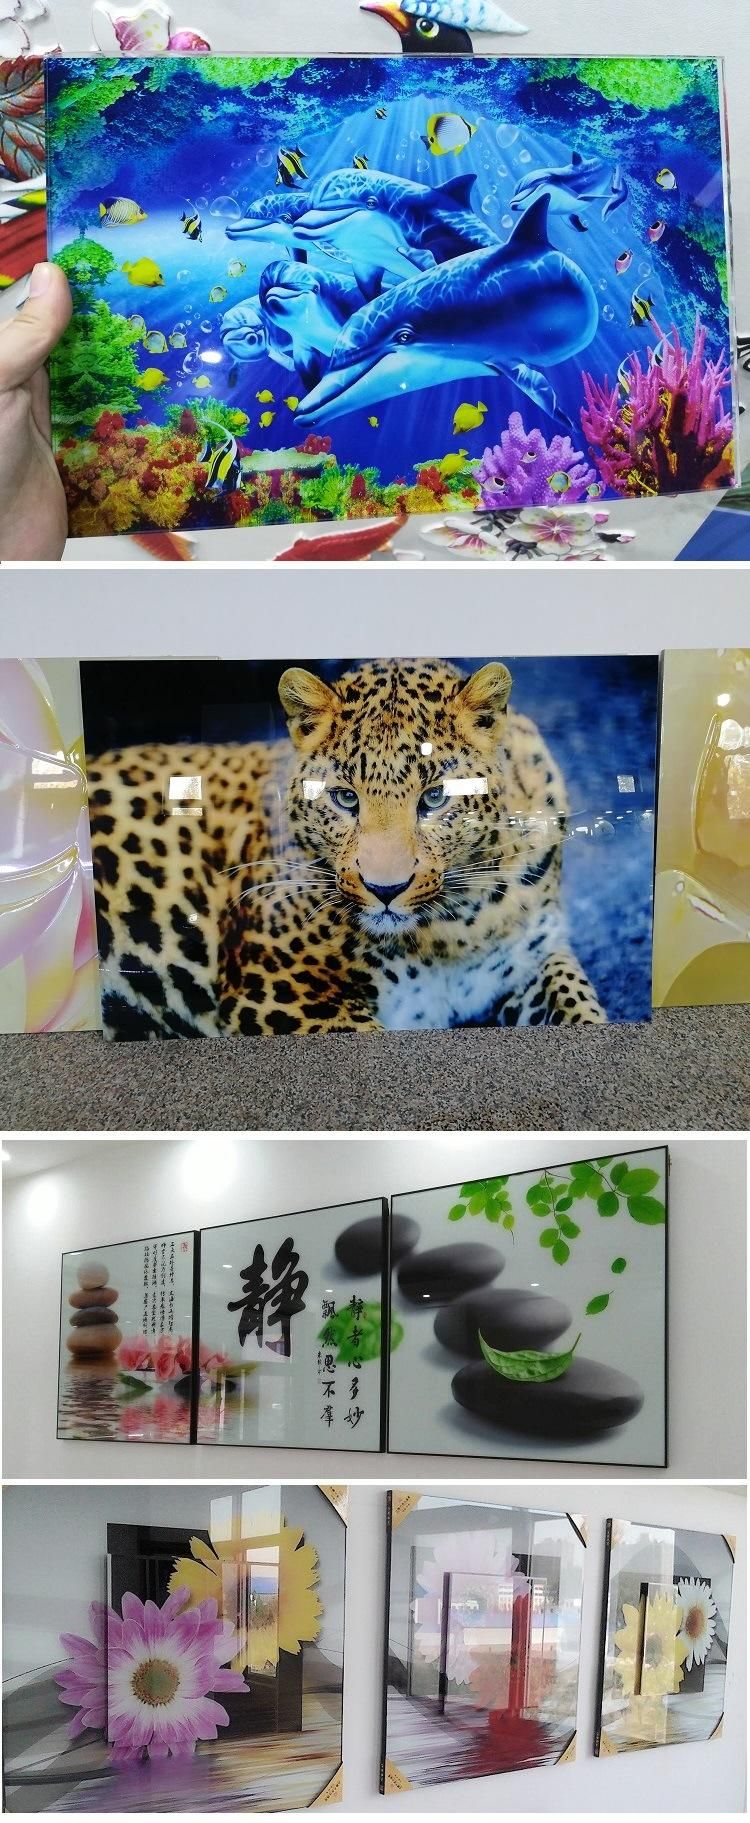 Ntek 2513 Glass UV Flatbed Printer Made in China